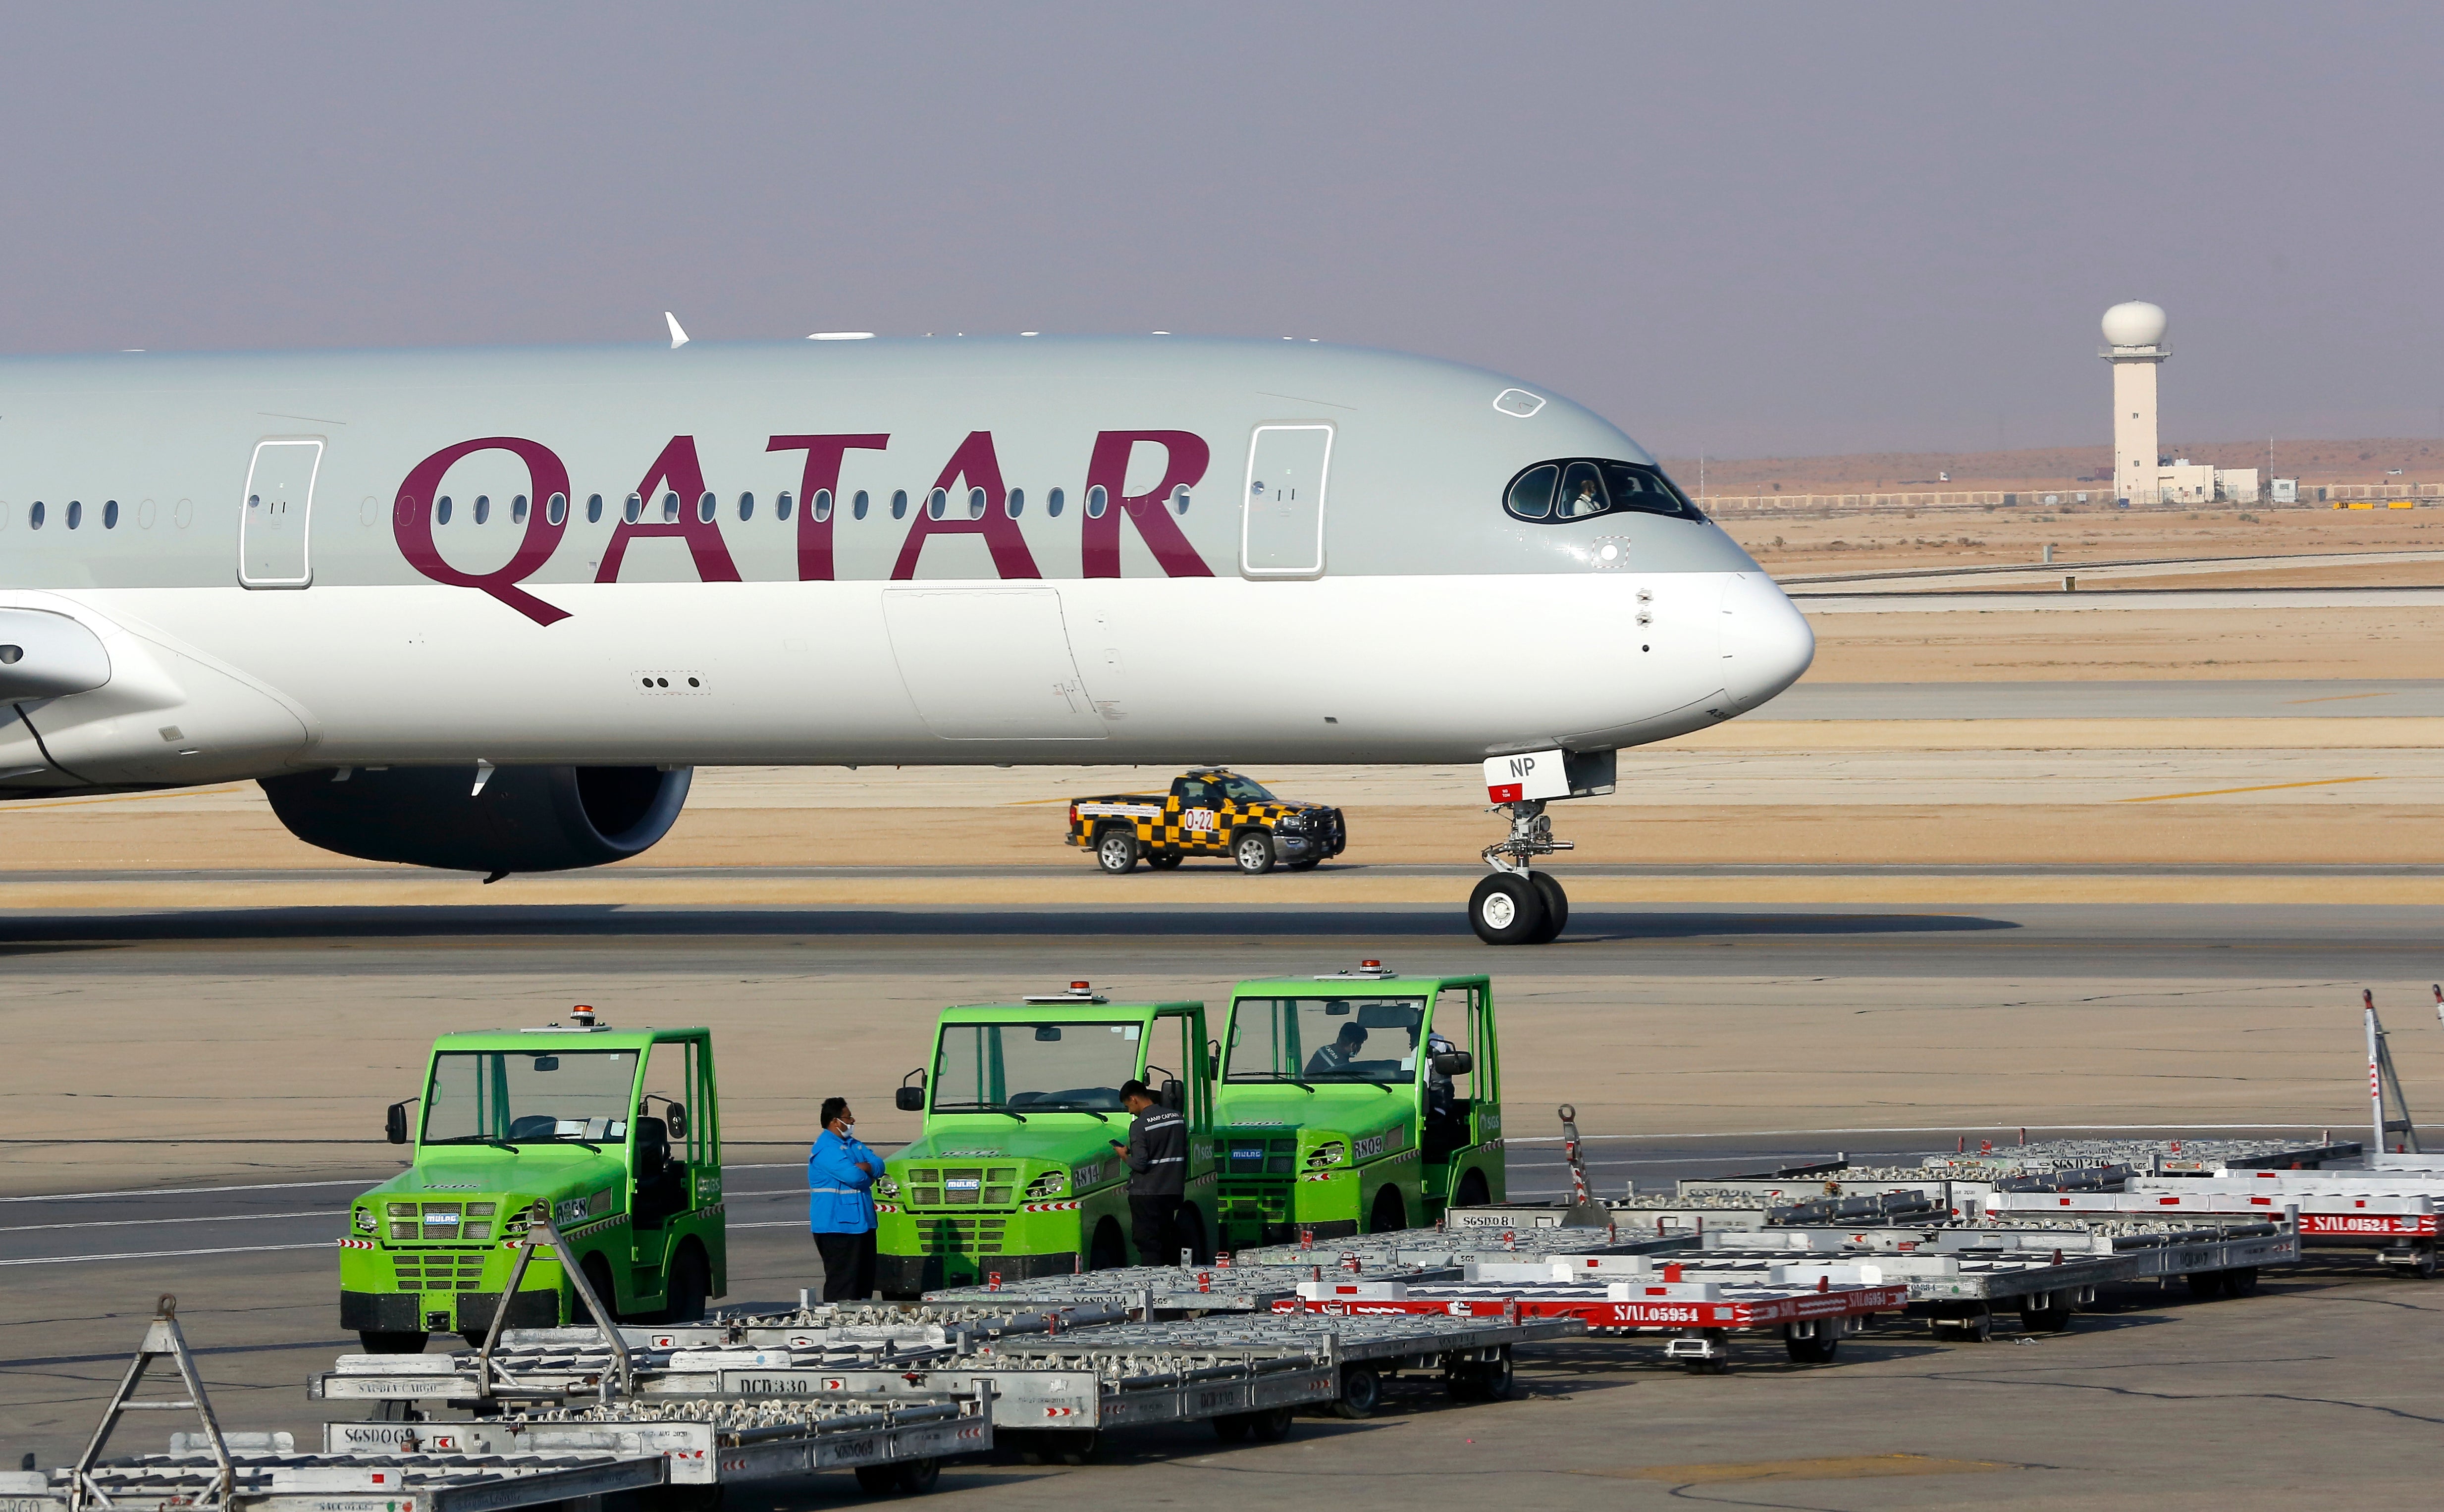 Qatar Airways Earns